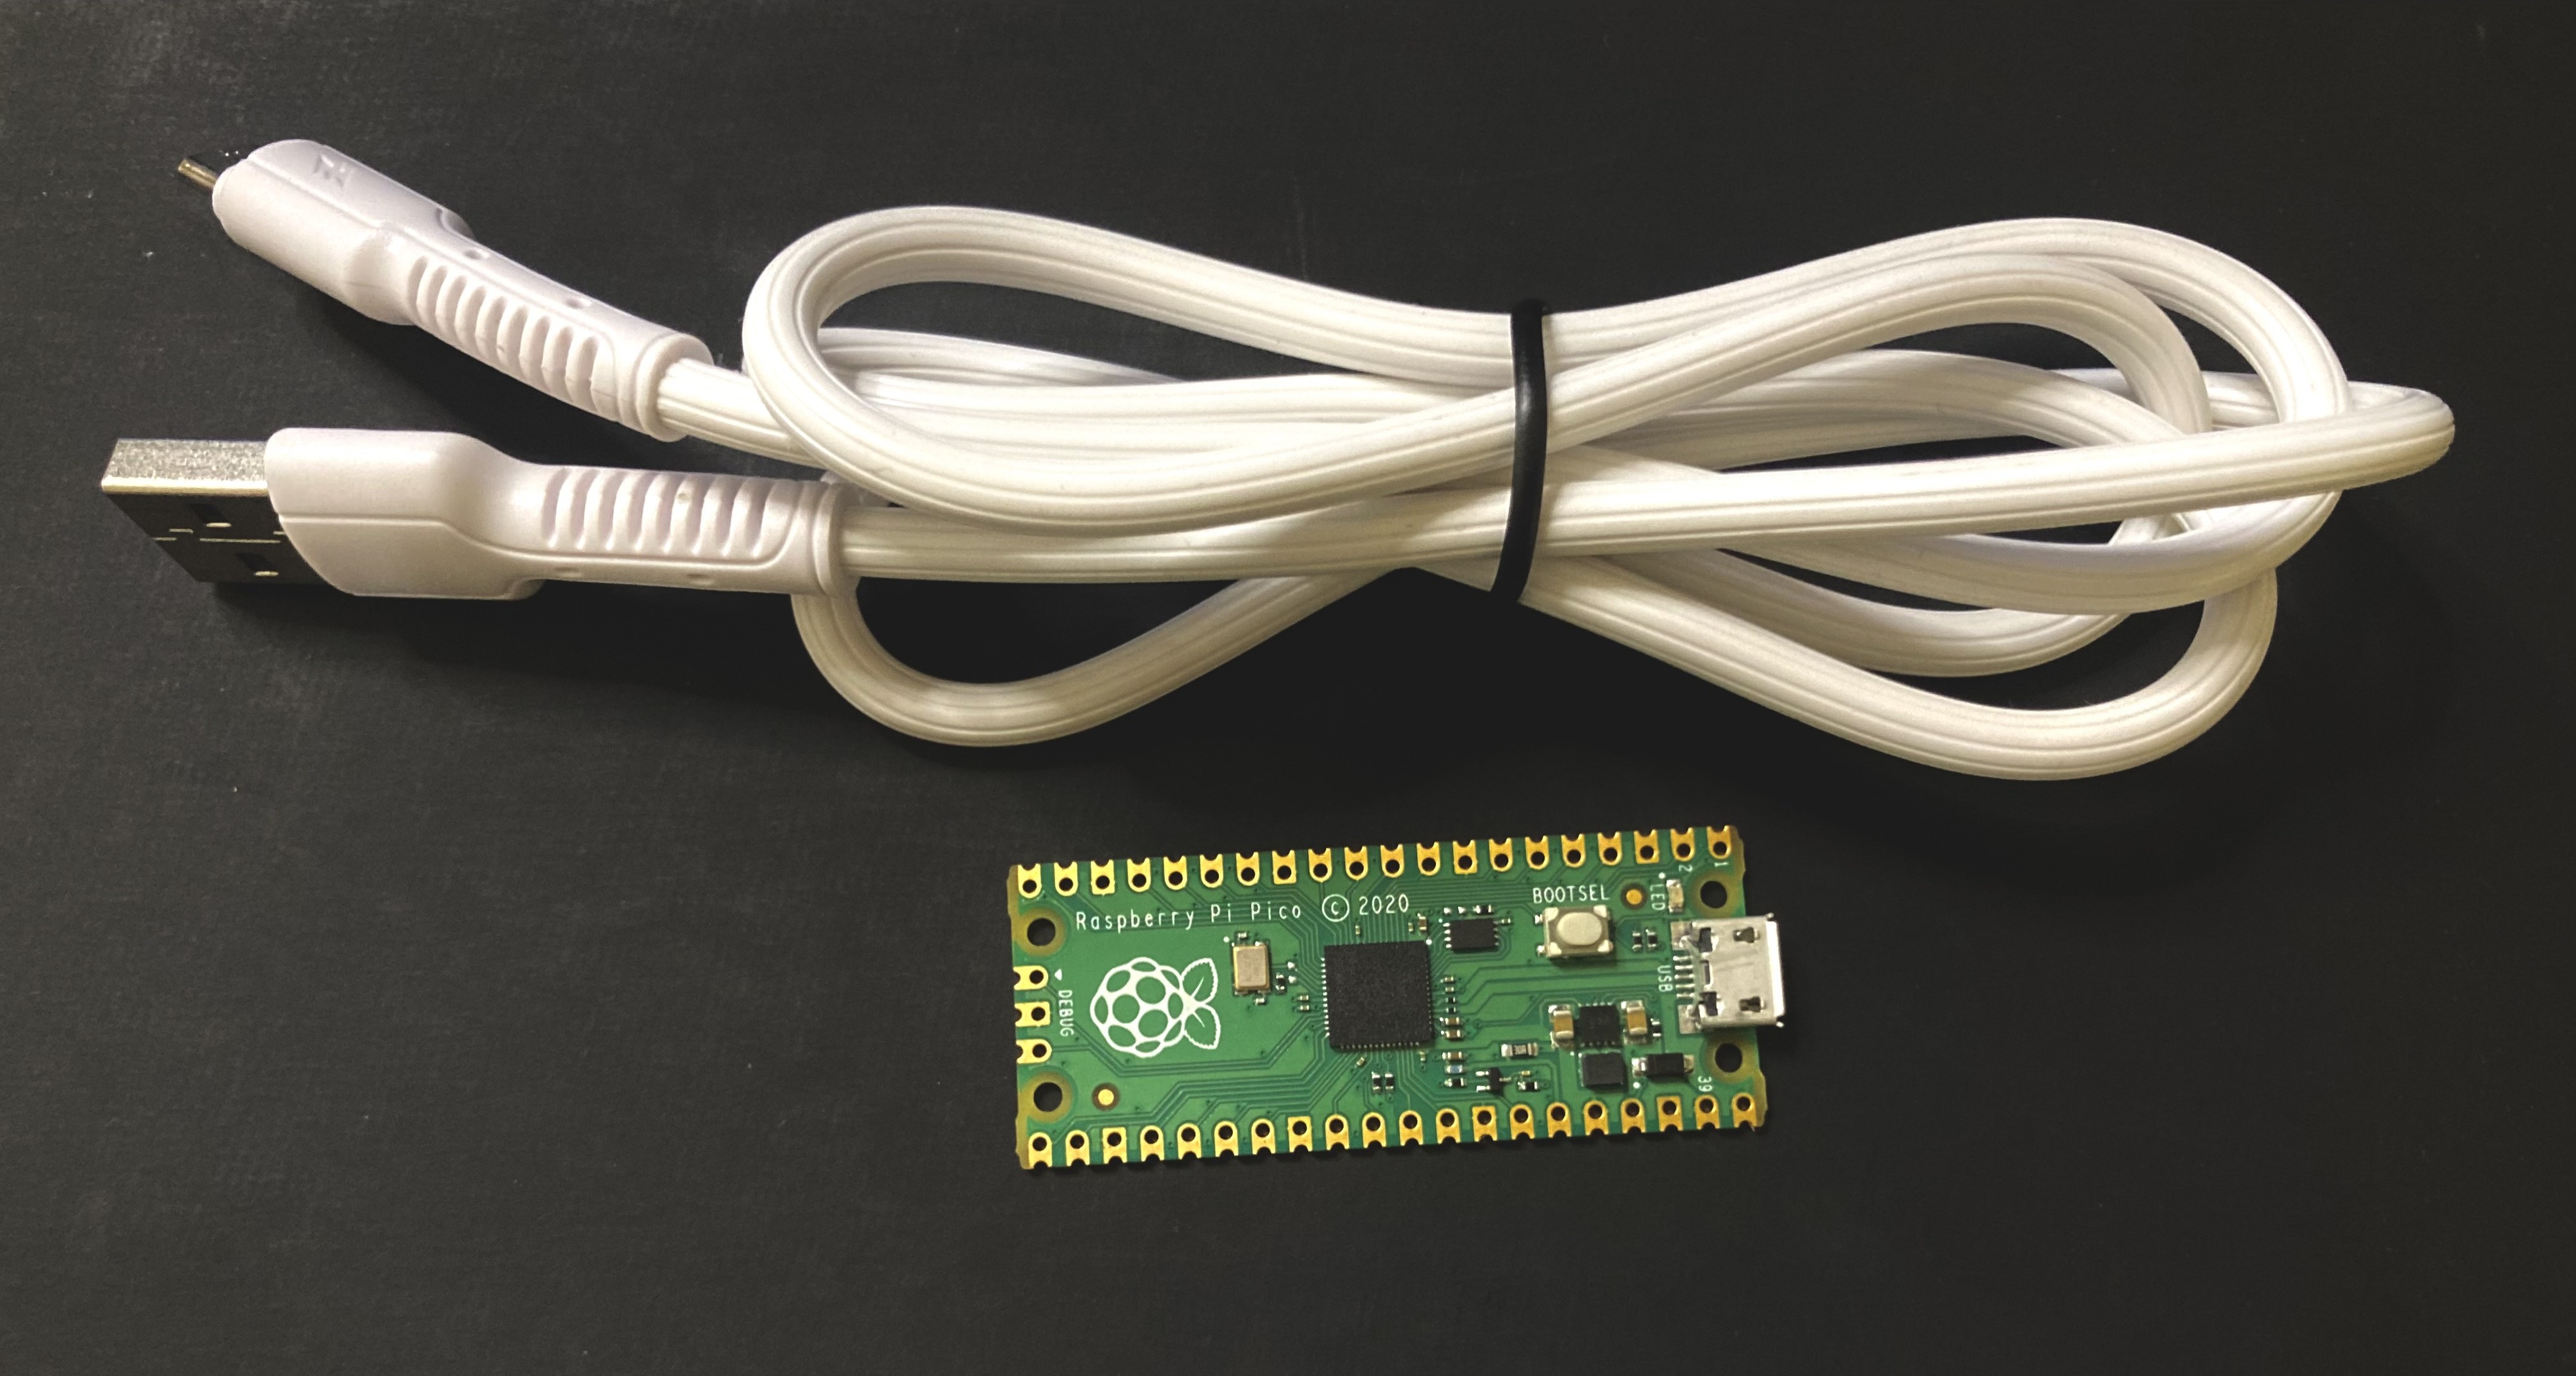 Pi Pico and USB Cable Image